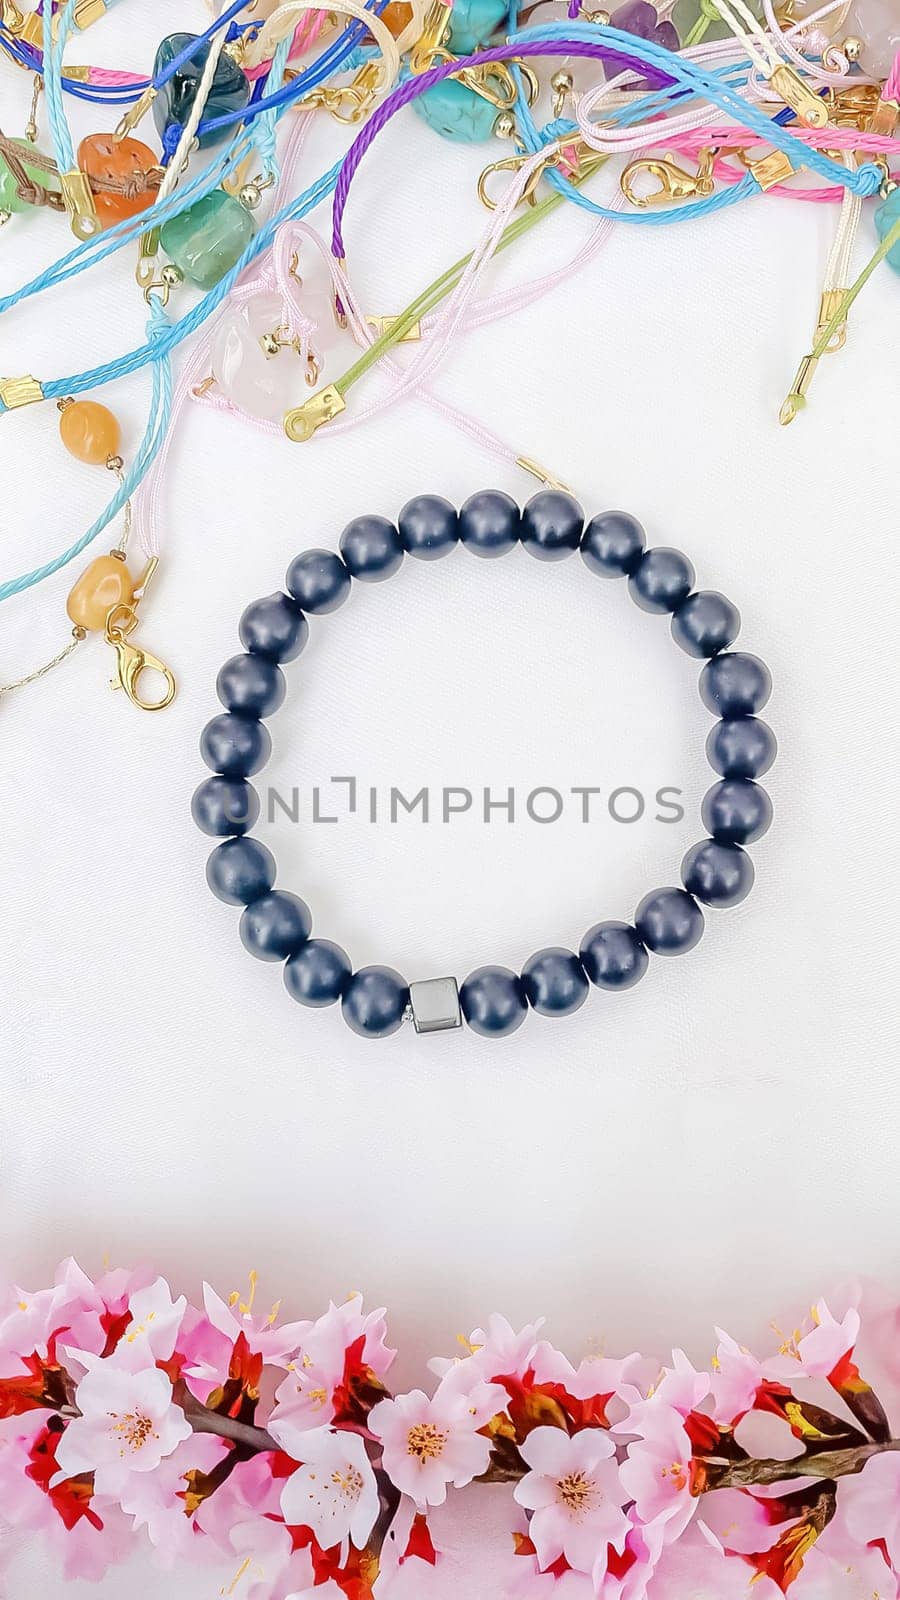 Bracelet of gray stone beads and cherry blossoms by yilmazsavaskandag